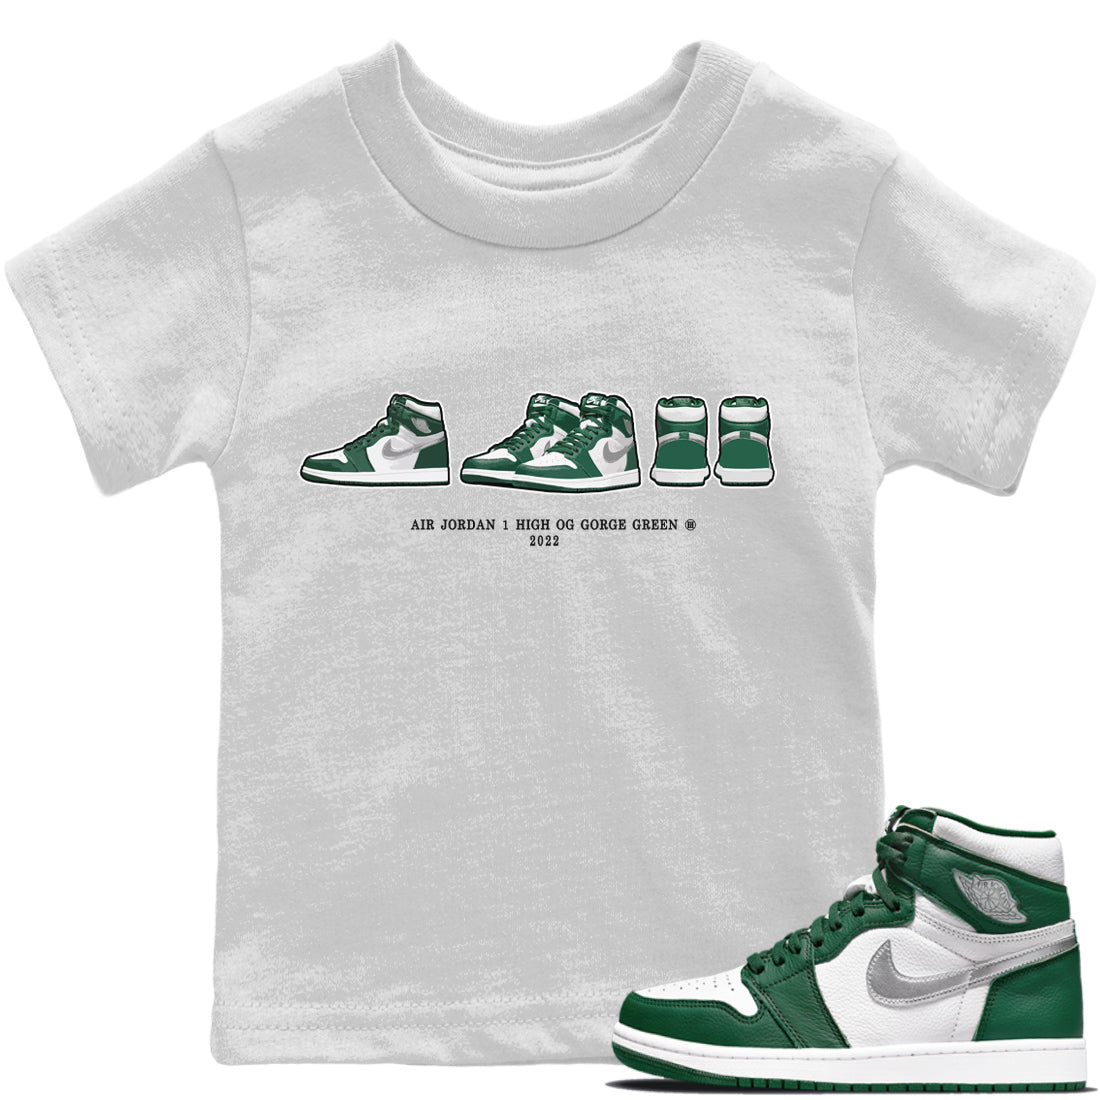 Jordan 1 Gorge Green Sneaker Match Tees Air Jordan 1 Prelude Sneaker Tees Jordan 1 Gorge Green Sneaker Release Tees Kids Shirts